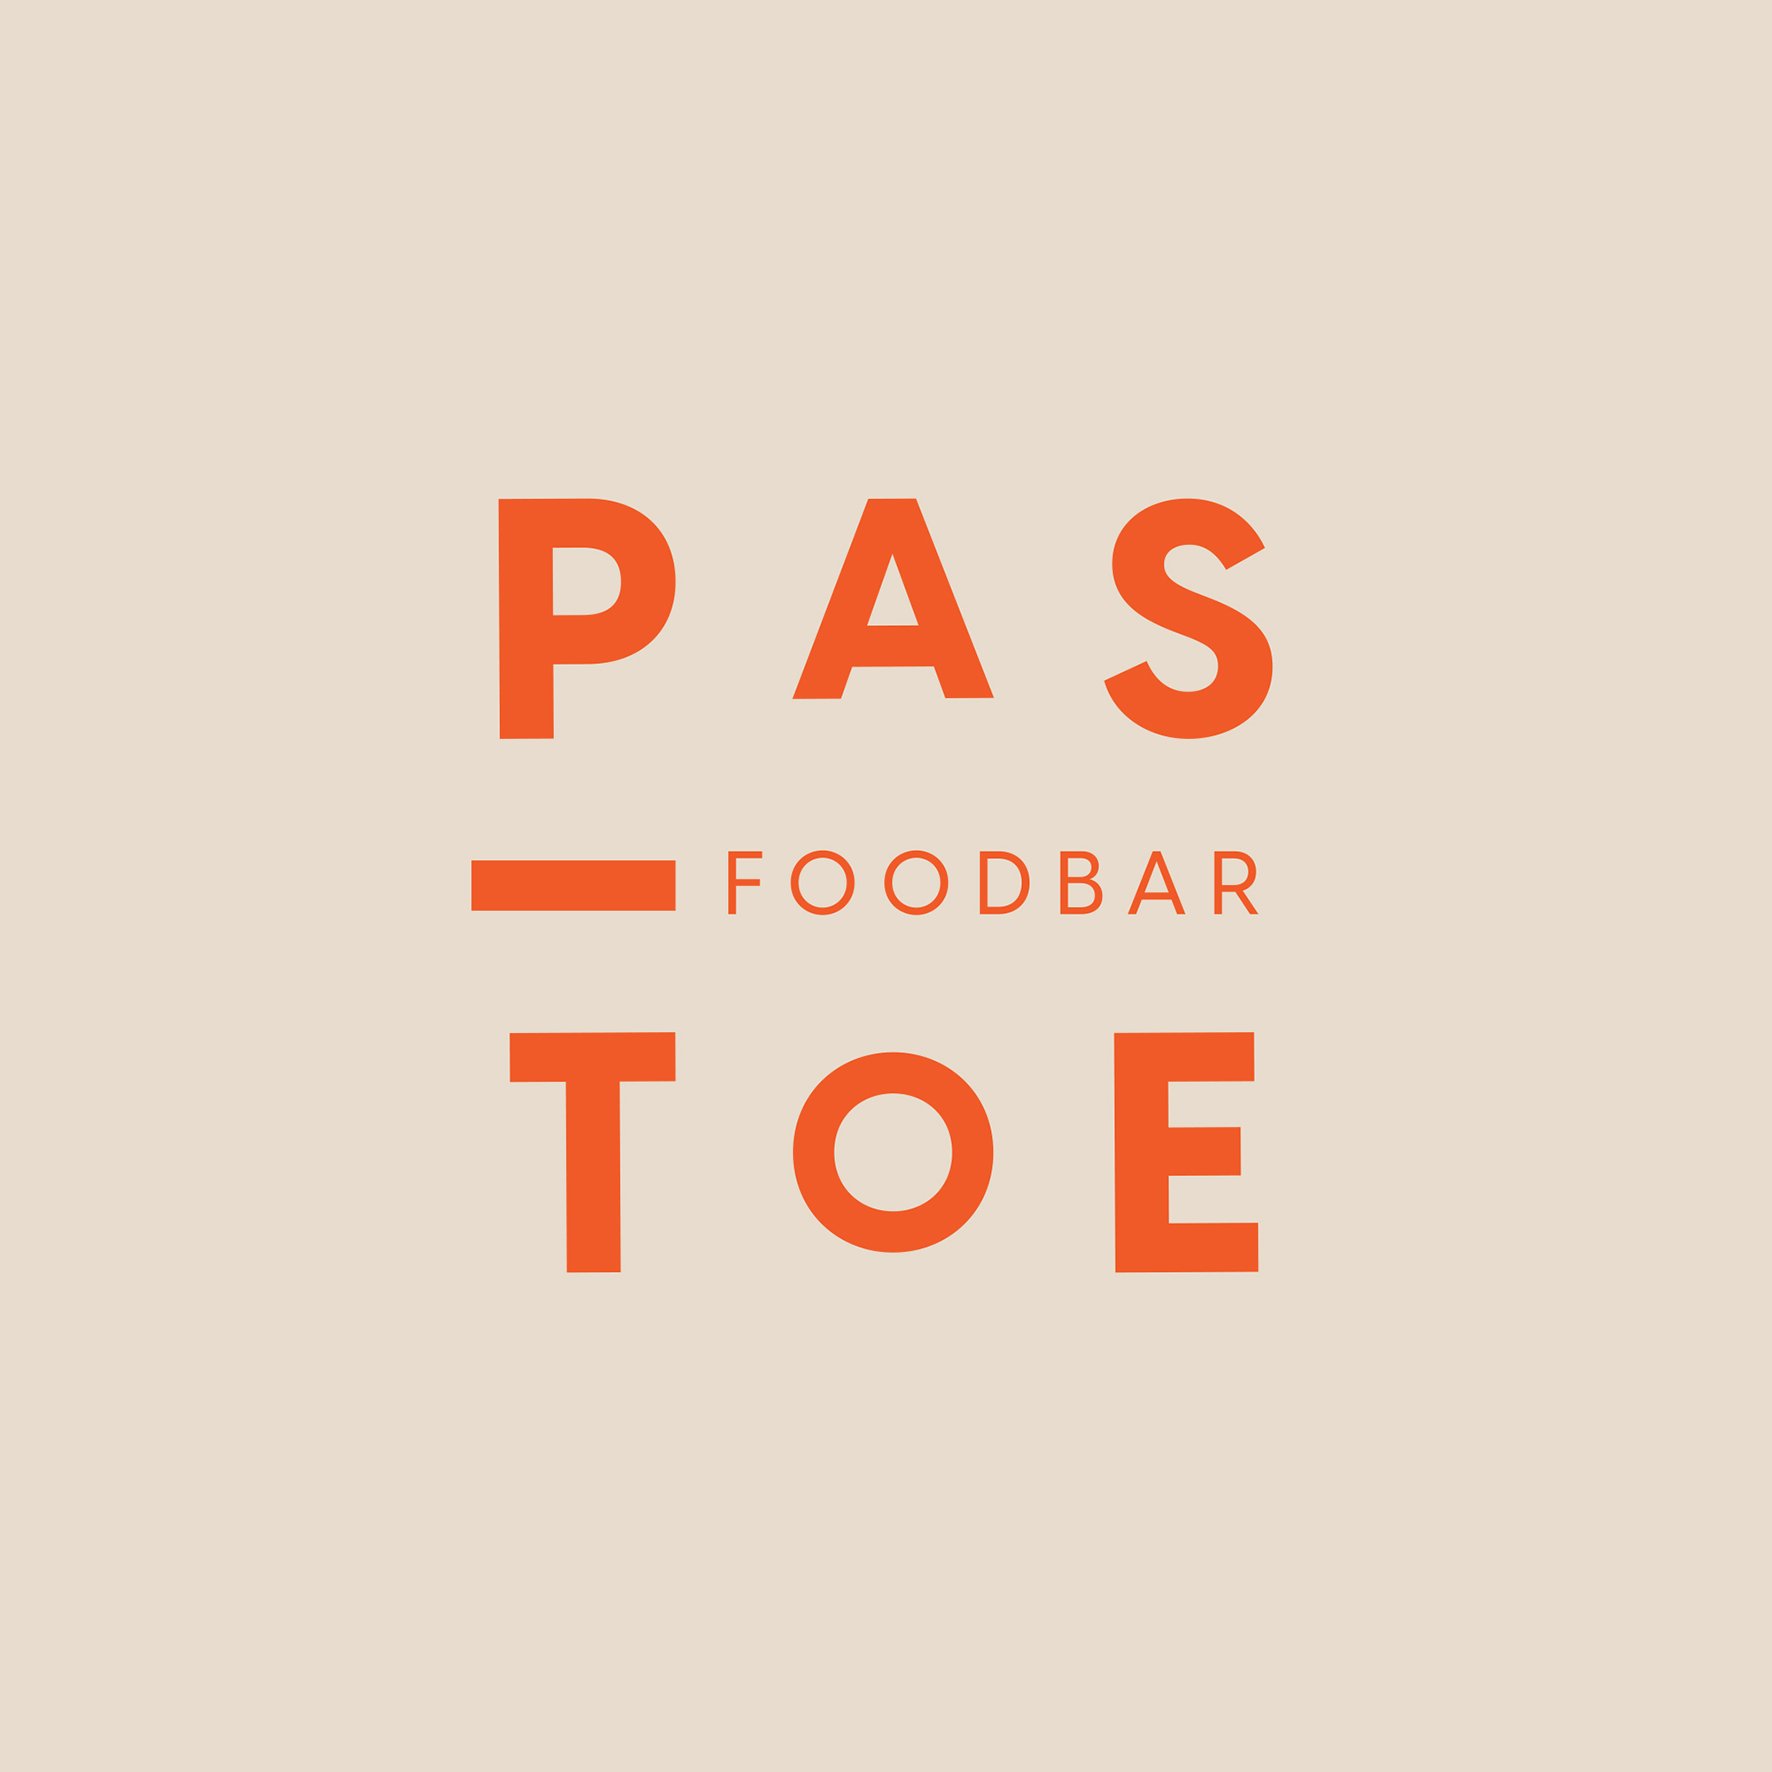 Pastoe Foodbar logo